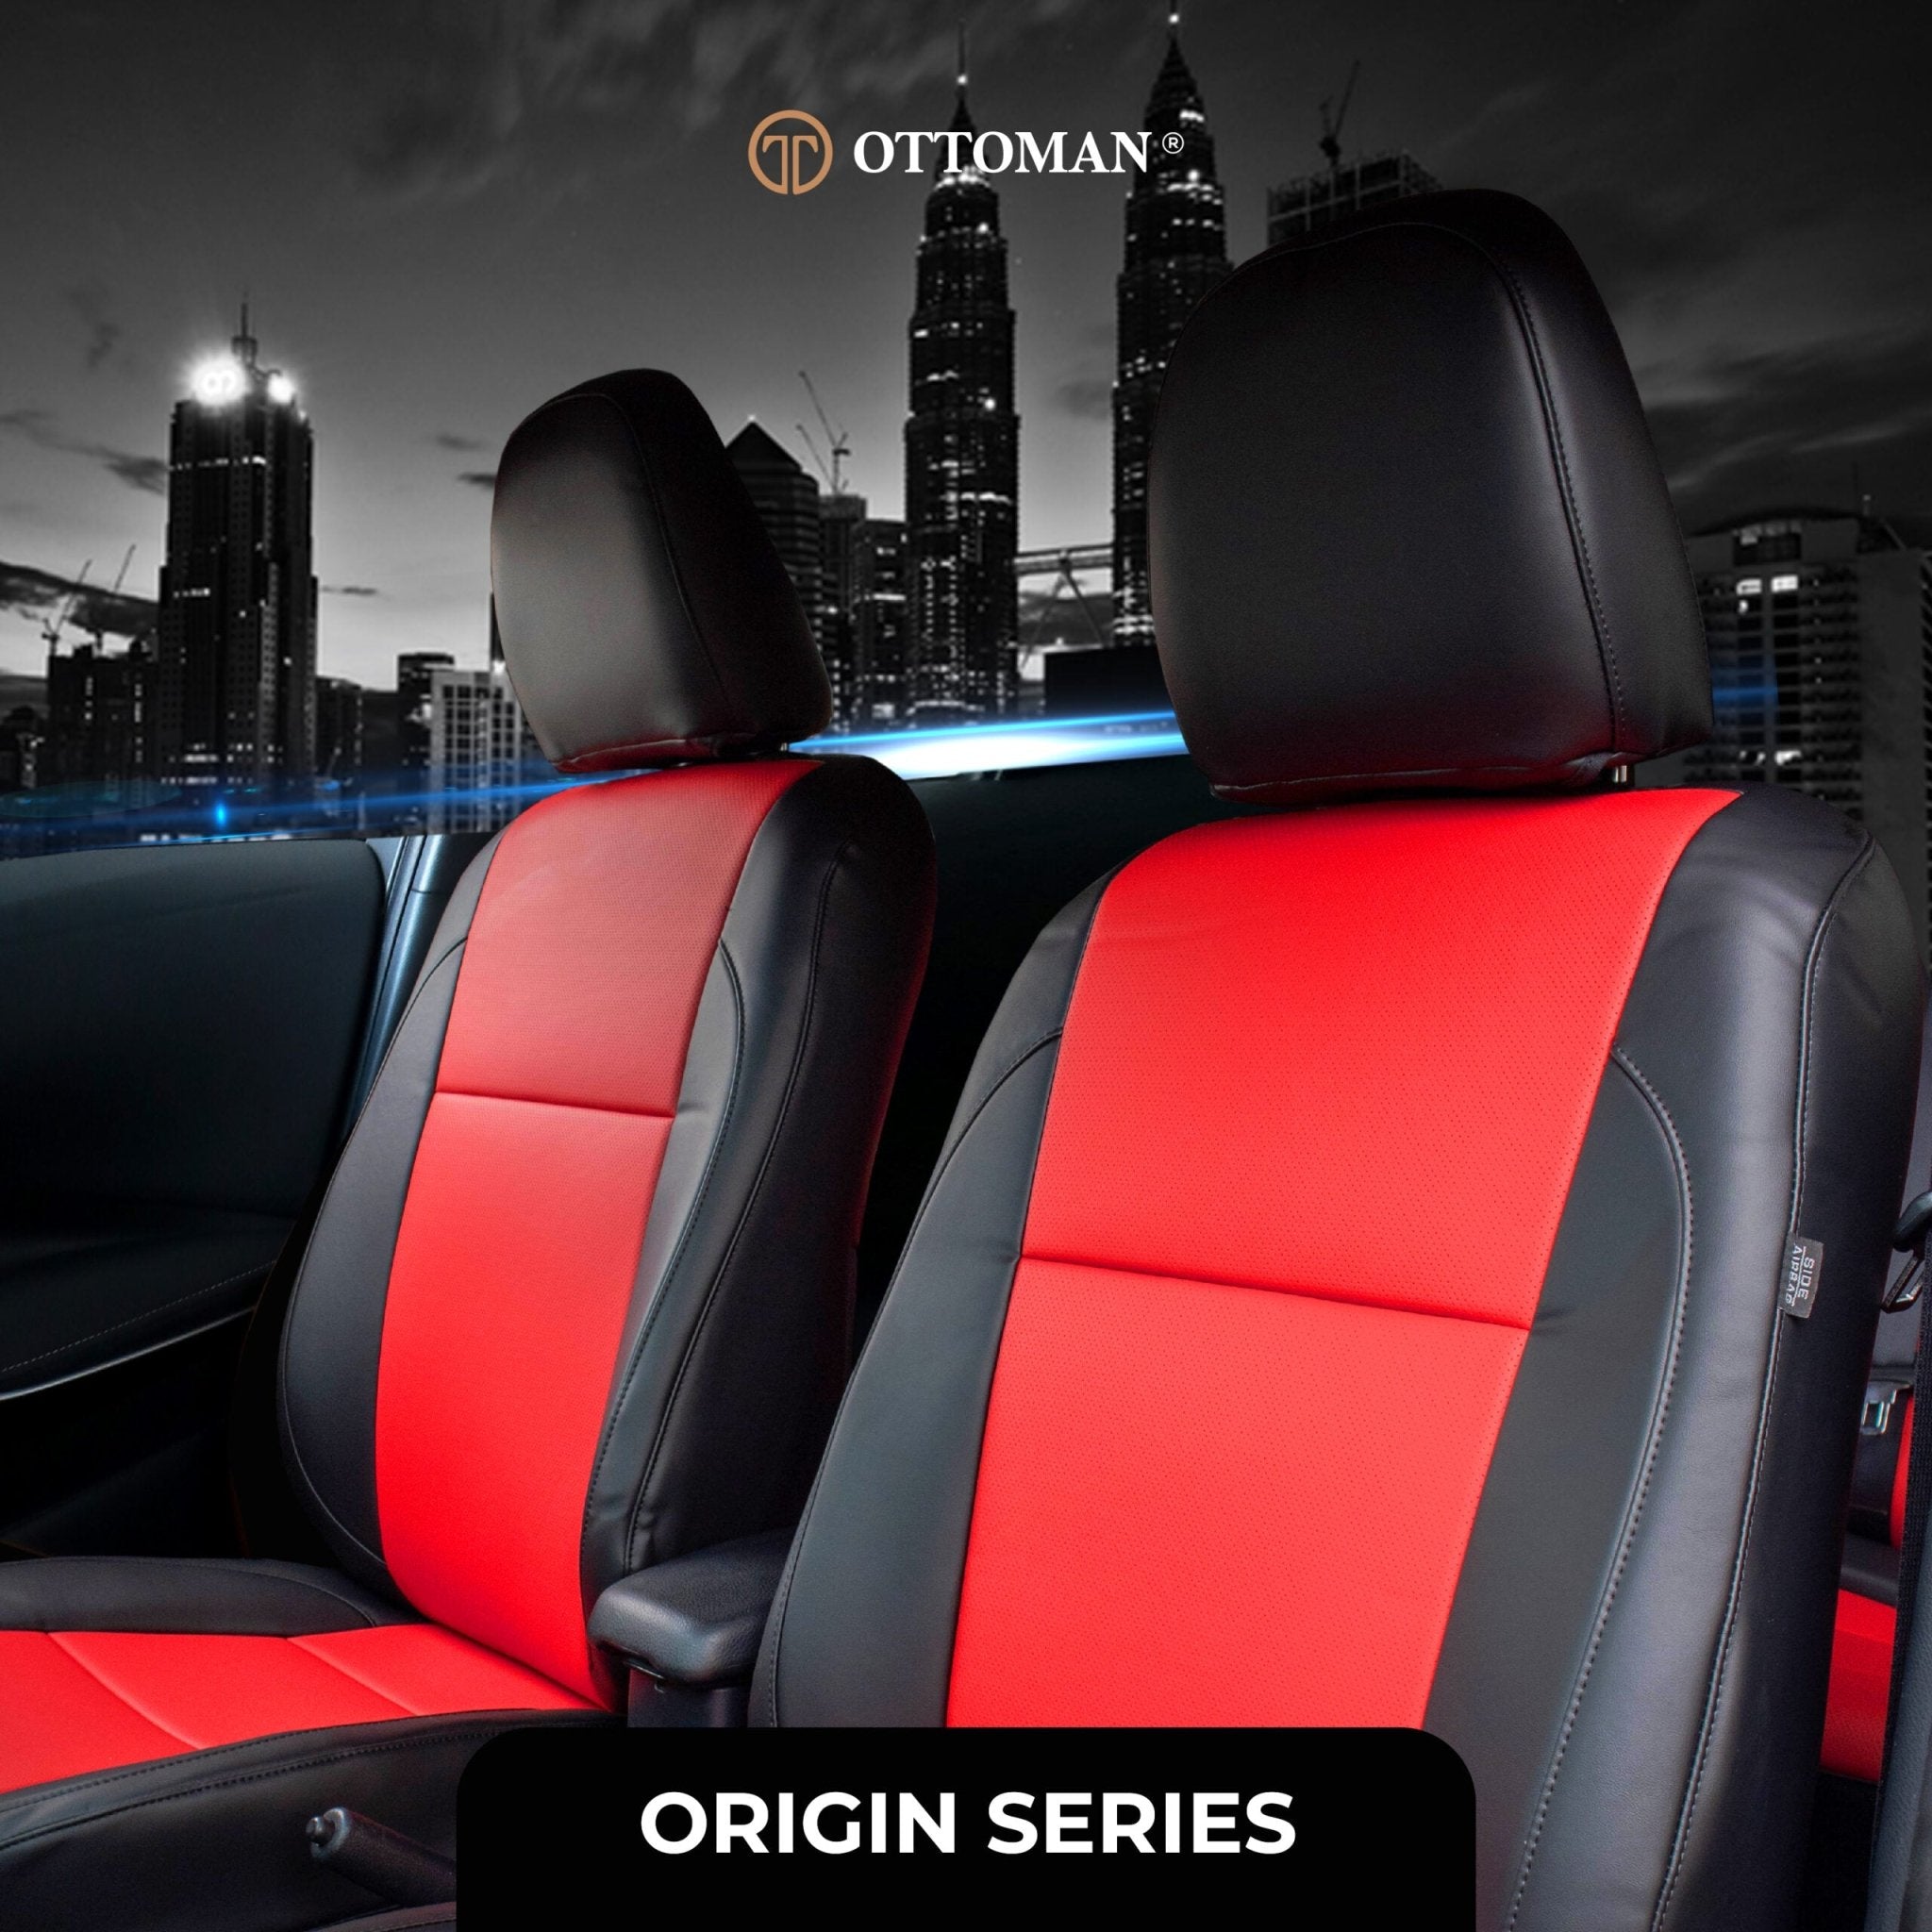 Nissan Almera (2012-Present) Ottoman Seat Cover Seat Cover in Klang Selangor, Penang, Johor Bahru - Ottoman Car Mats